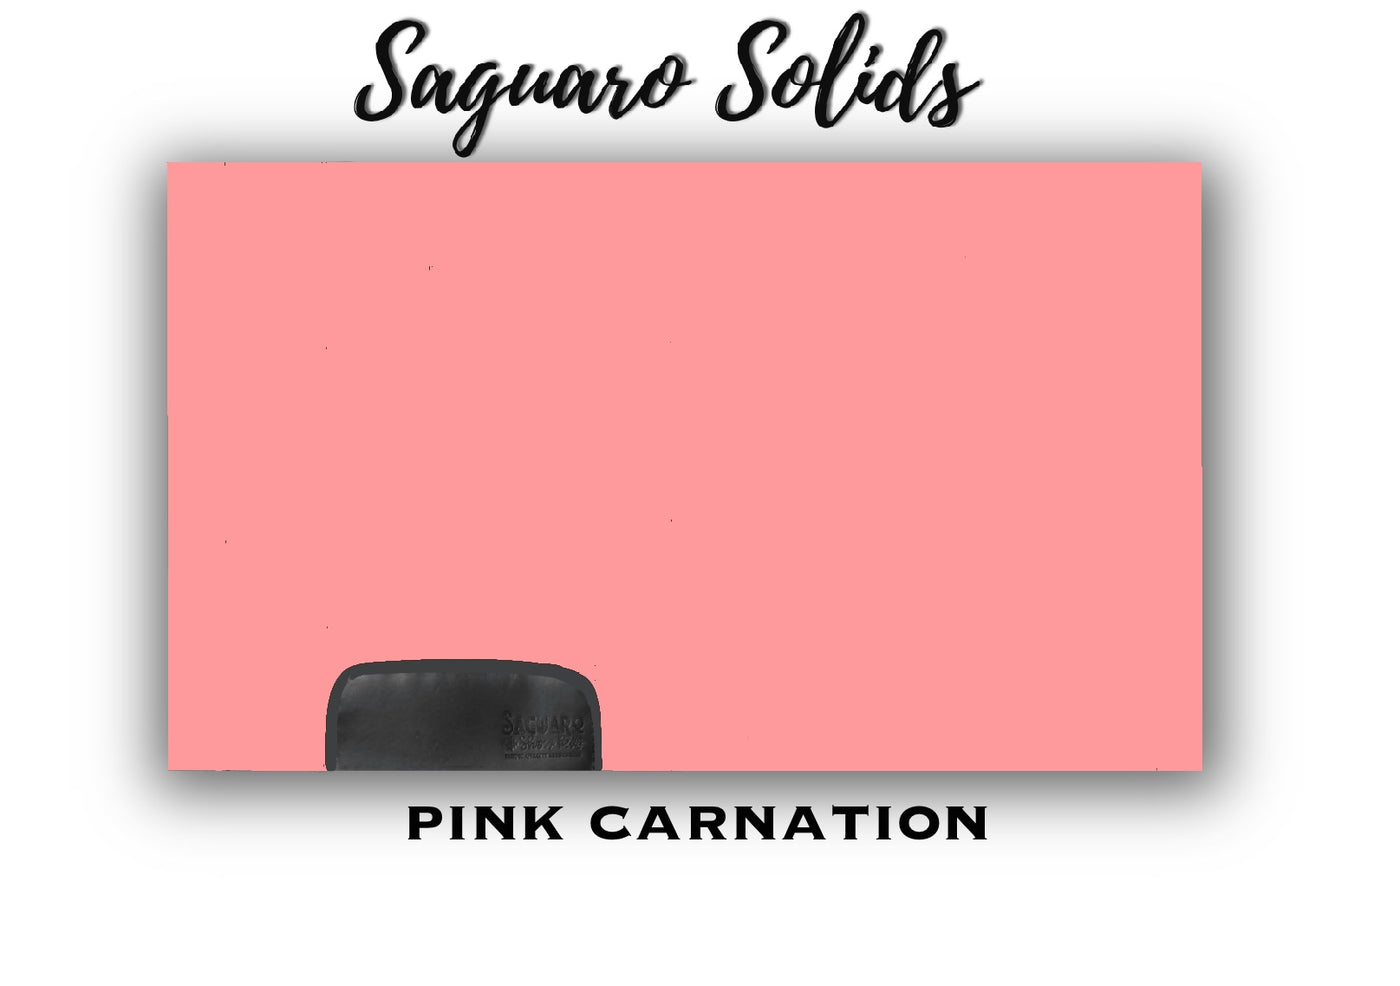 Saguaro Solid "Pink Carnation" Show Pad (SEMI-CUSTOM)